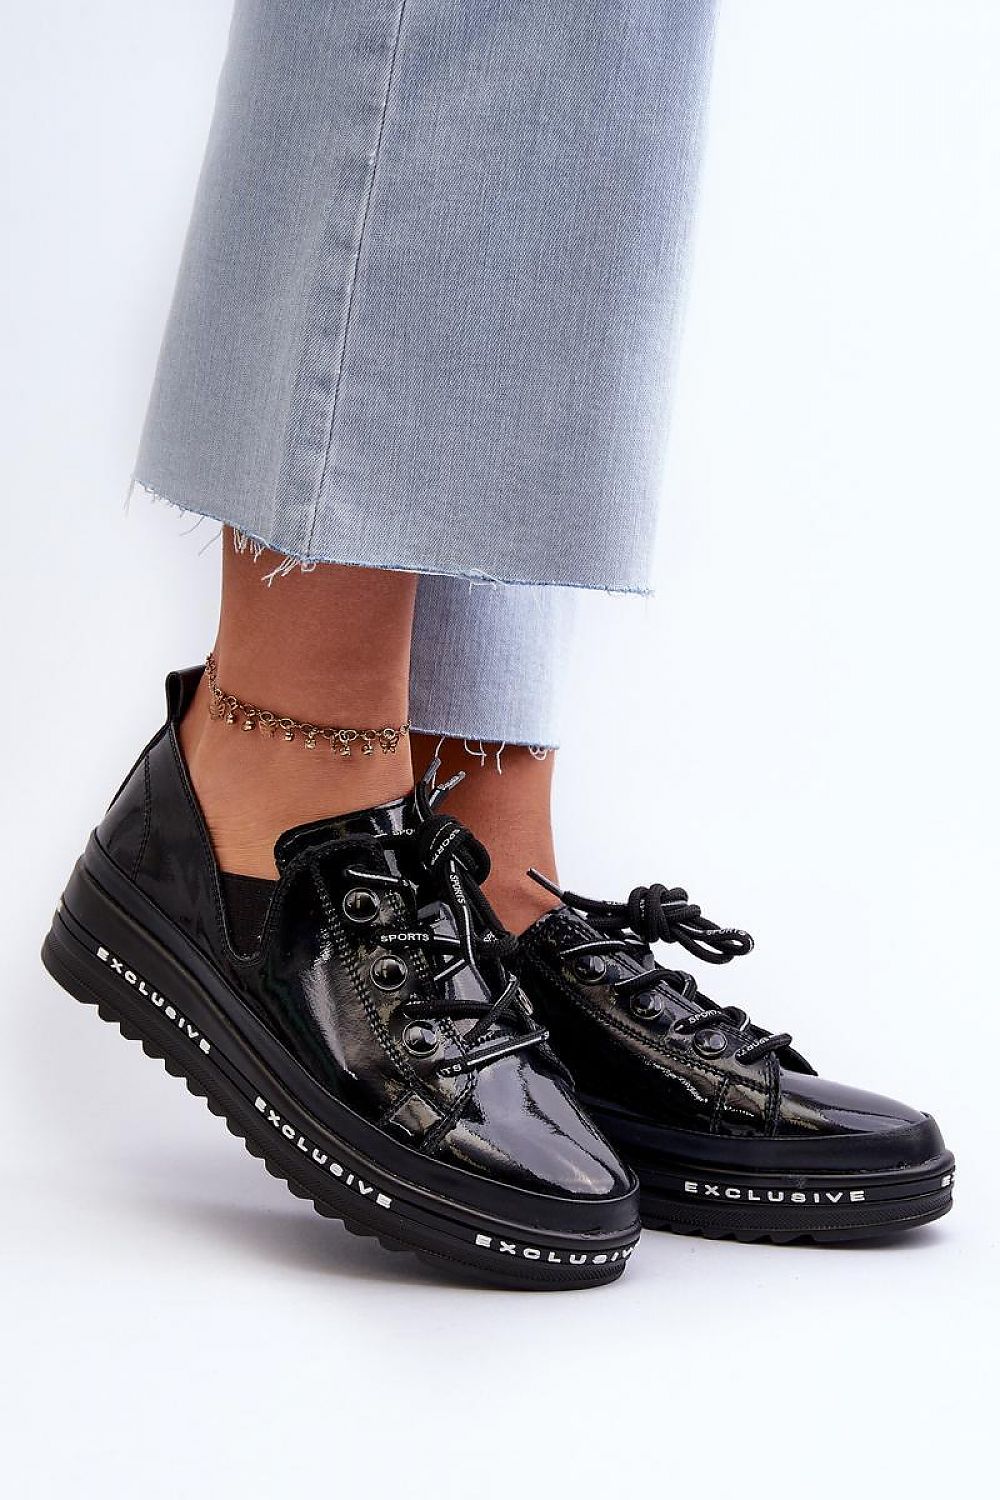 TEEK - Exclusive Patent Leather Platform Womens Shoes SHOES TEEK MH black 6.5 